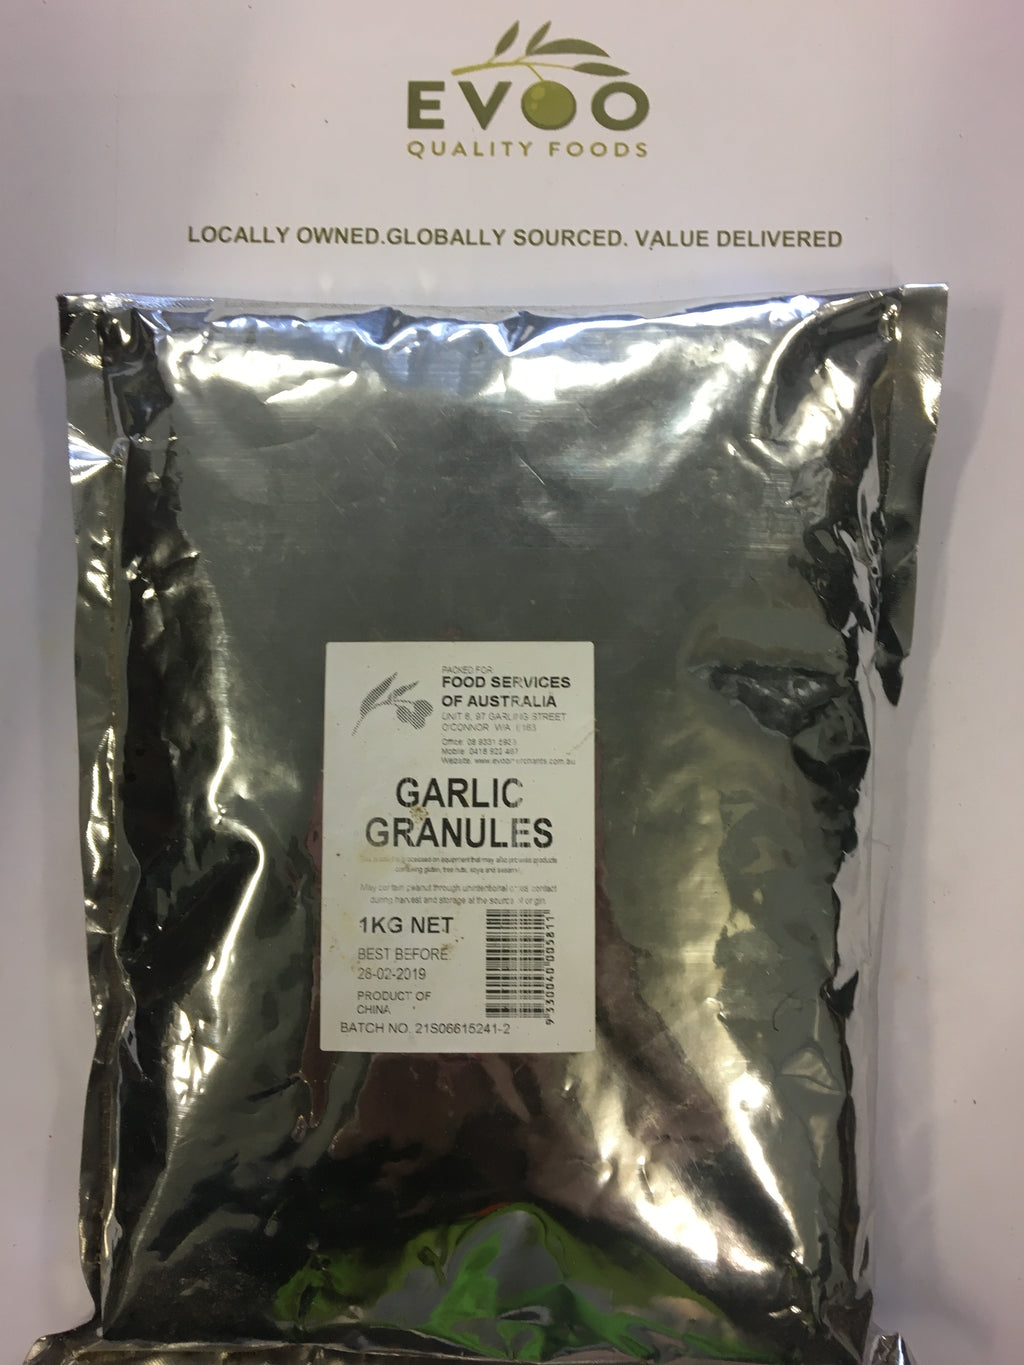 Garlic Granules 1kg Bag Evoo QF